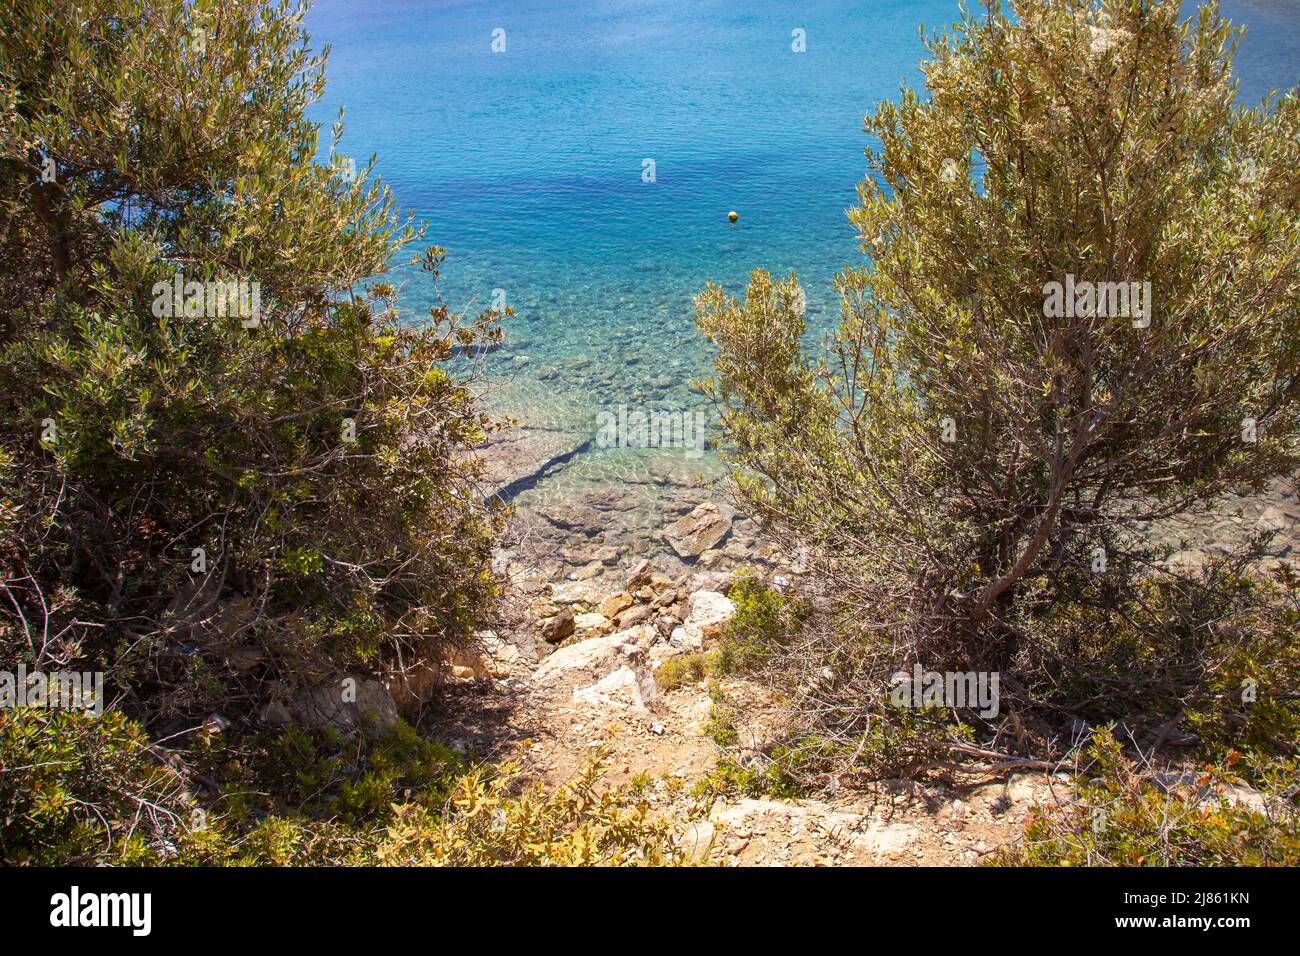 Unspoilt seashore in the Mediterranean. The landscape of sea and bushes. Travel concept. Stock Photo